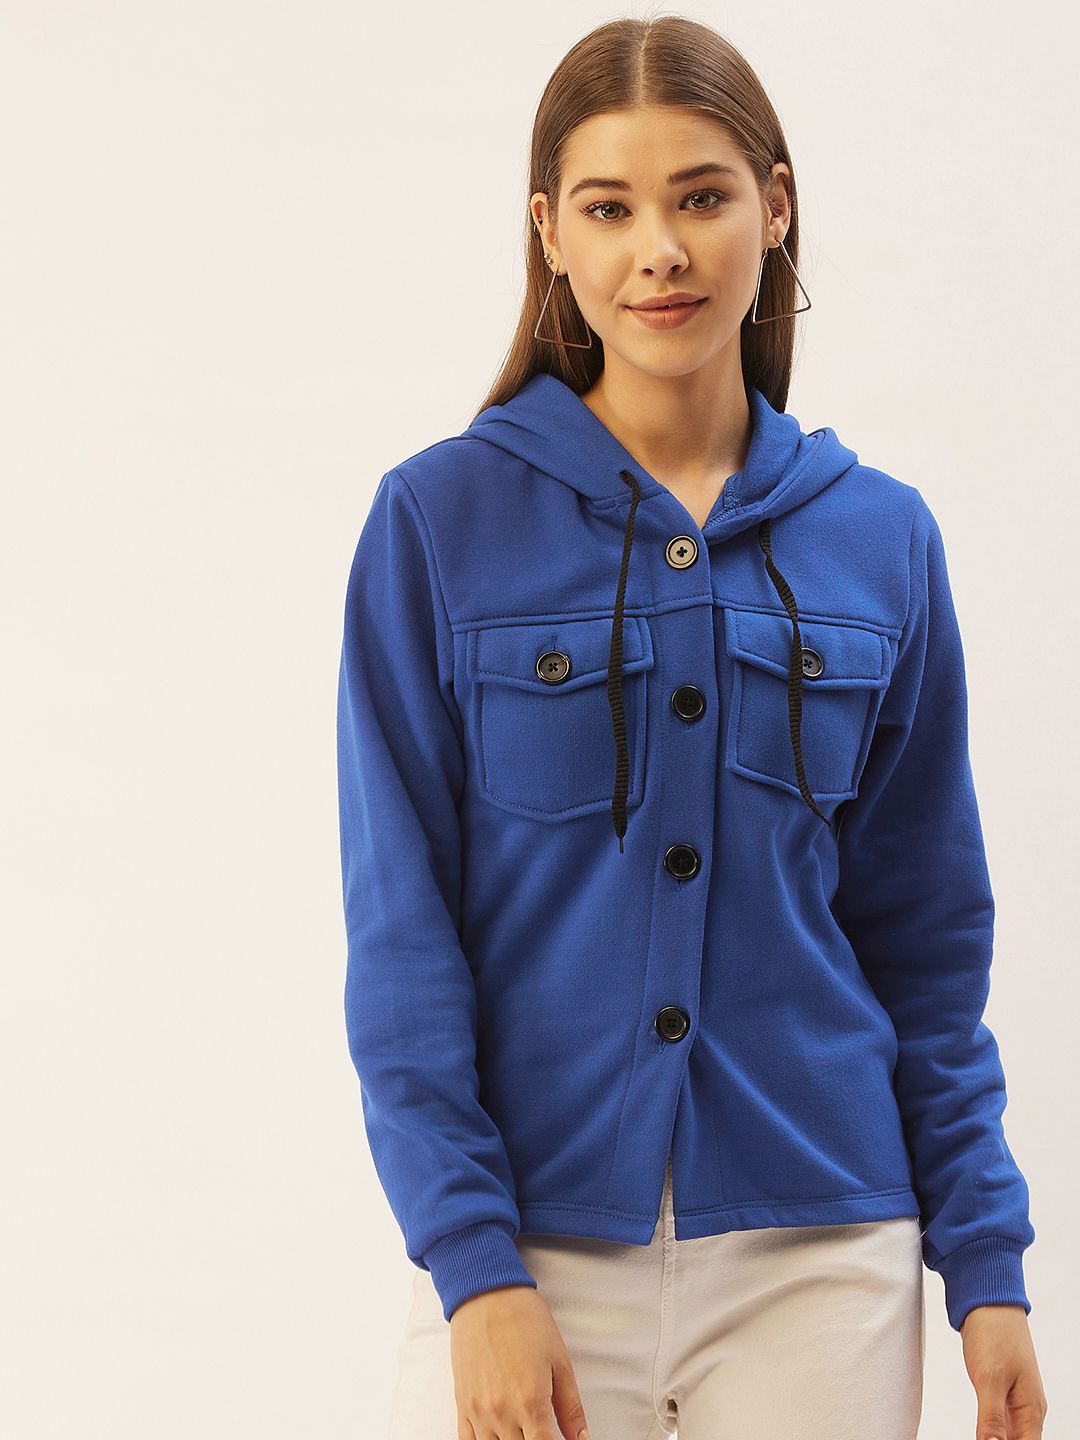 Belle Fille Women Blue Hooded Sweatshirt Price in India